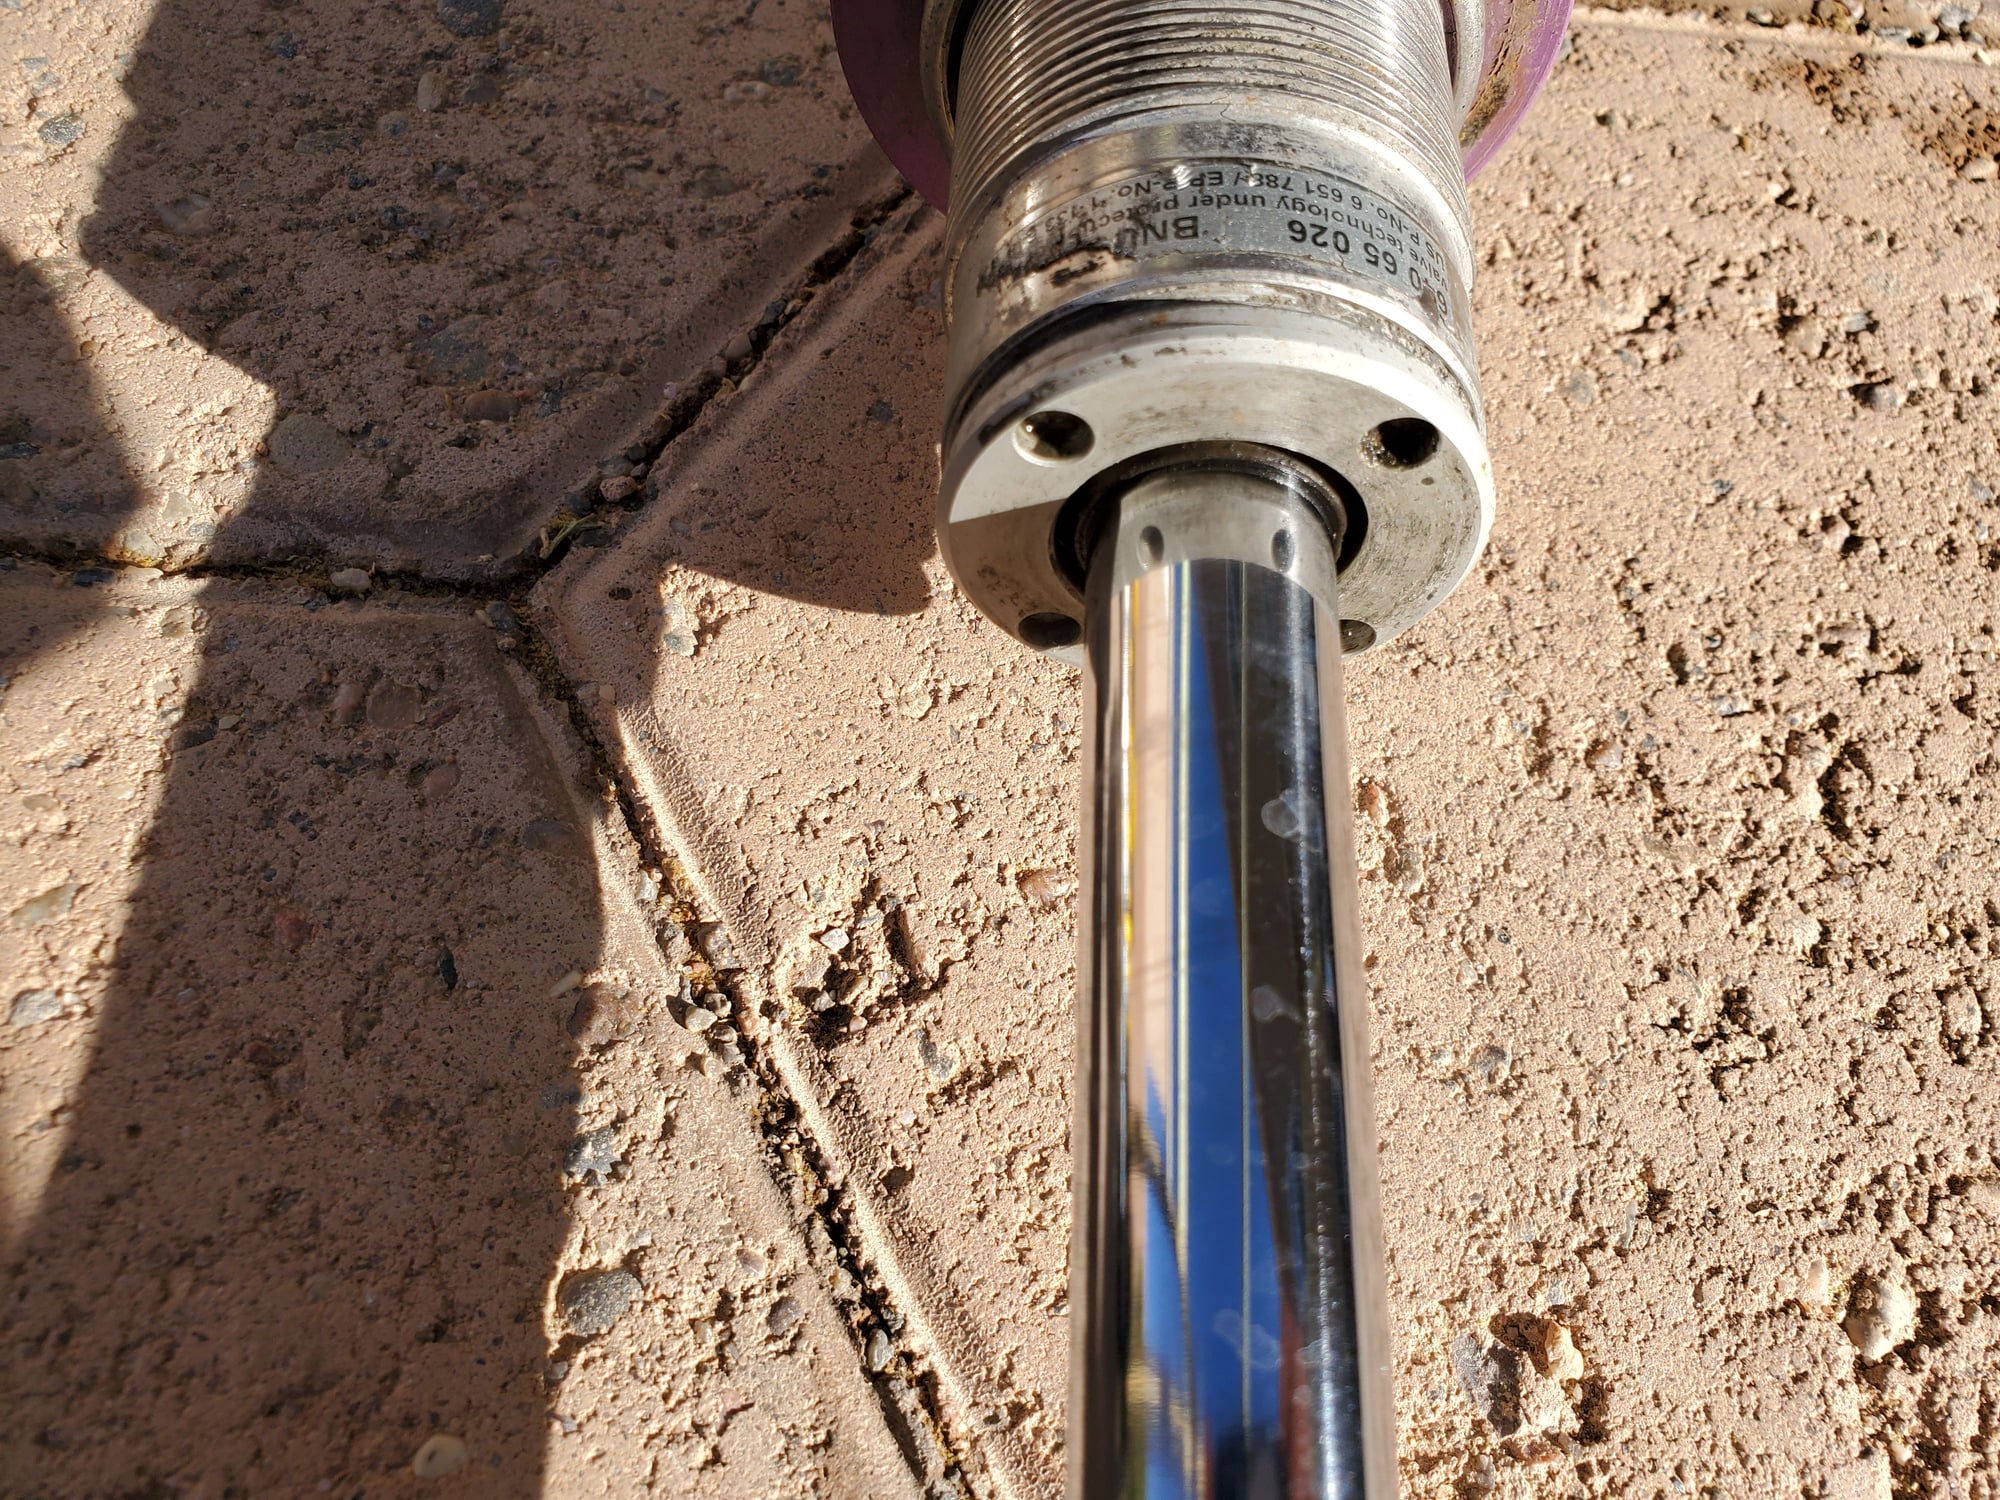 Steering/Suspension - Kw v3 coilovers ~18k miles - Used - Albuquerque, NM 87109, United States